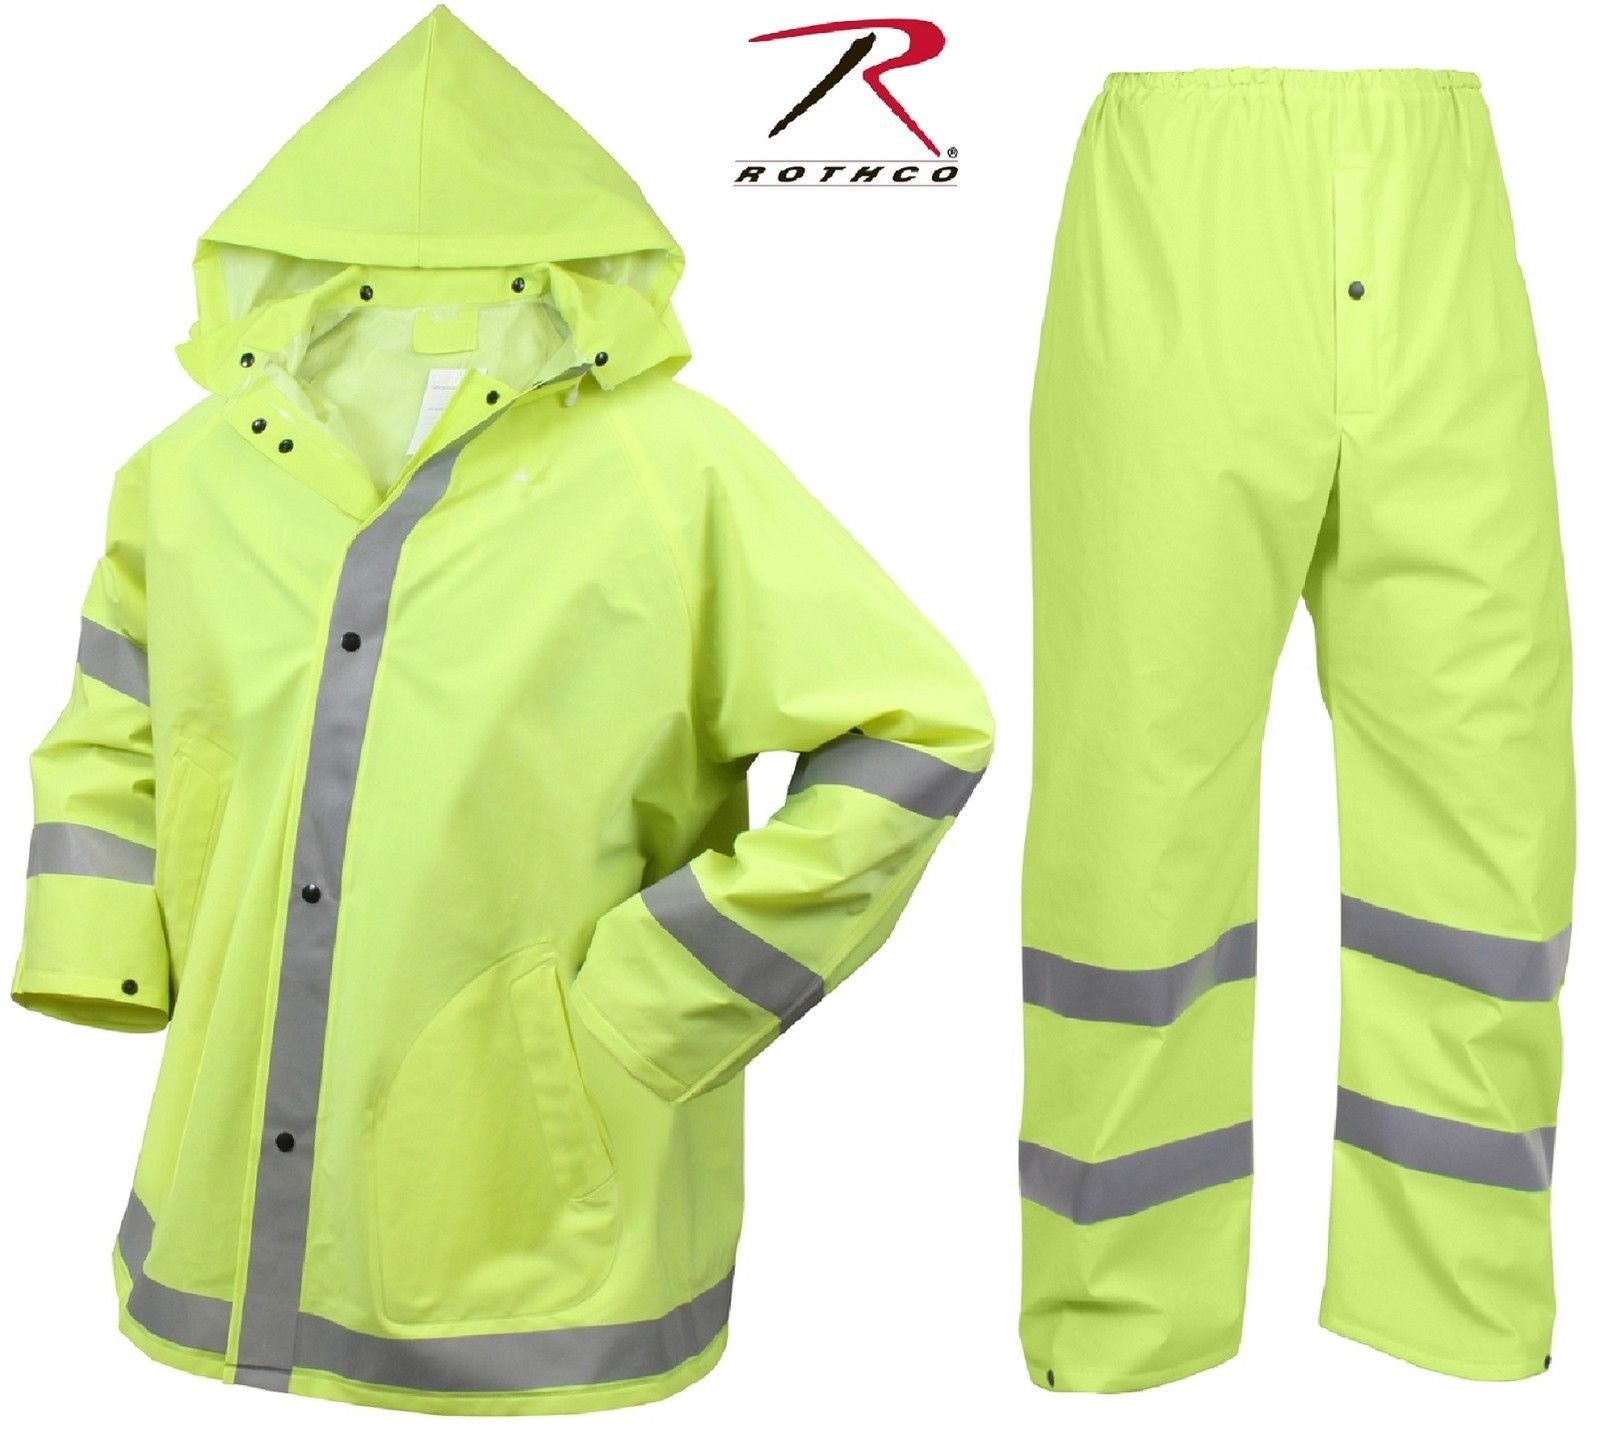 Waterproof Reflective Safety Rain Suit Jacket & Pants w/ Detachable Ho ...